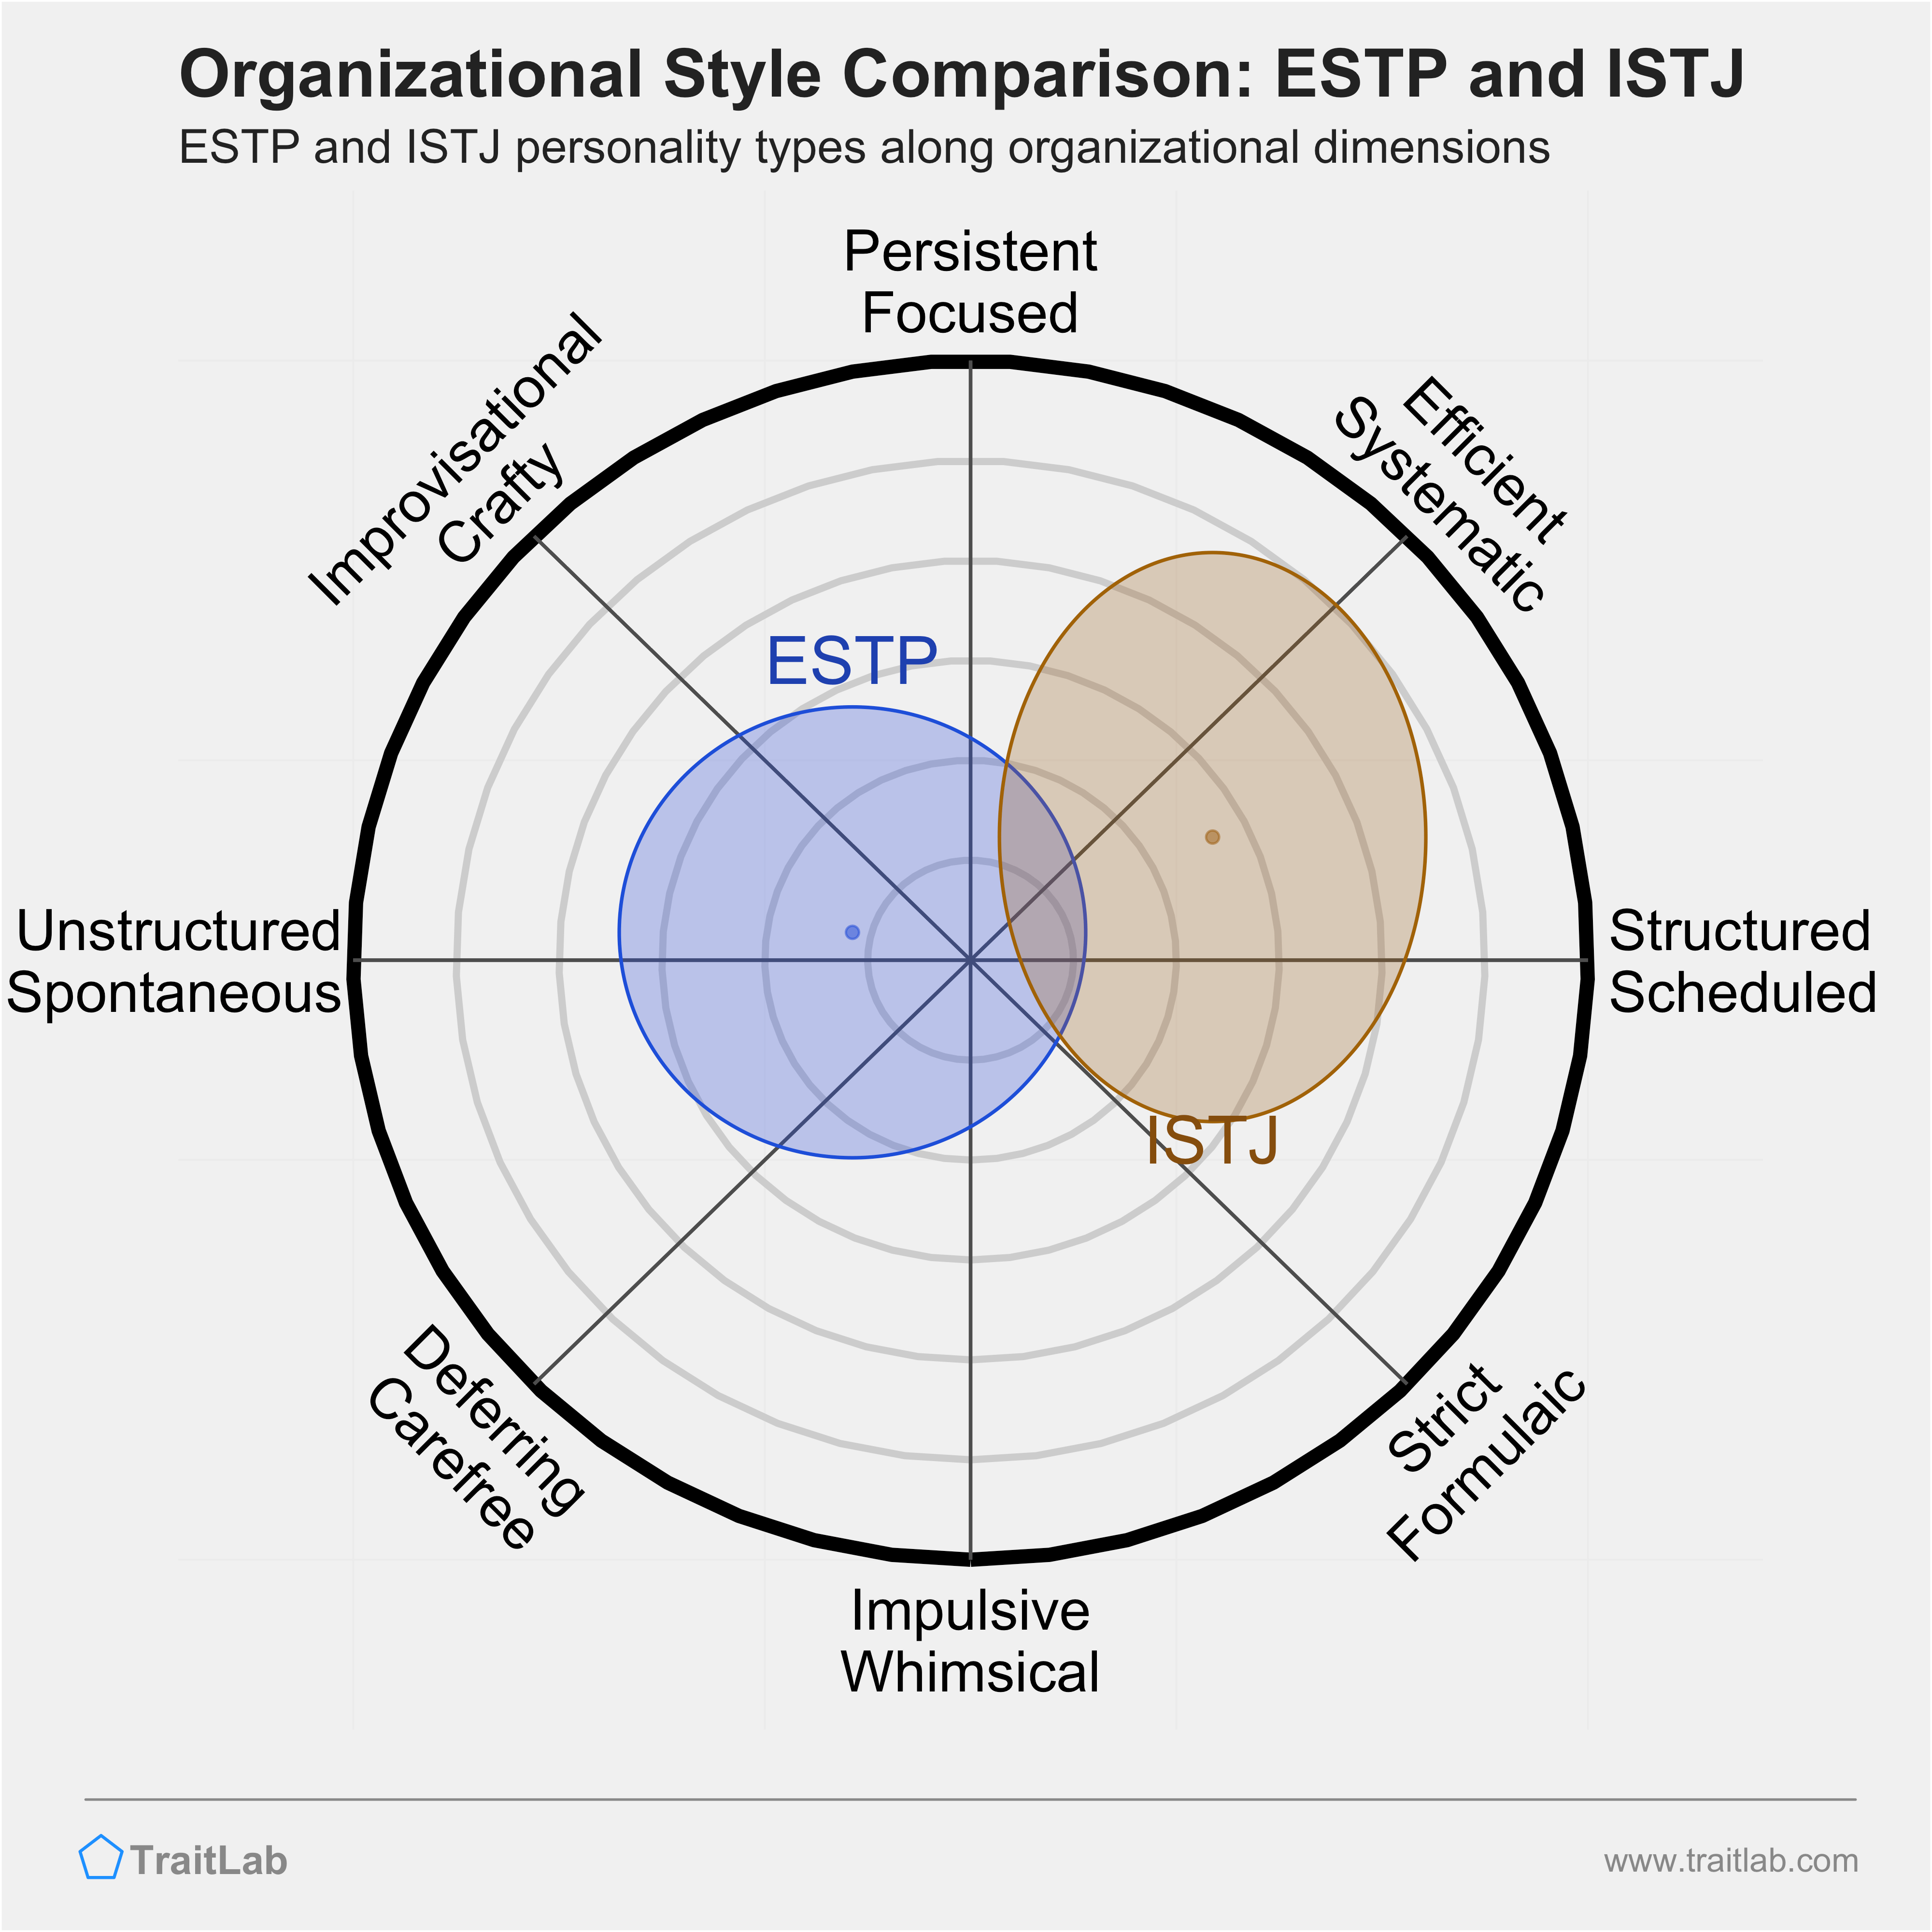 ESTP and ISTJ comparison across organizational dimensions